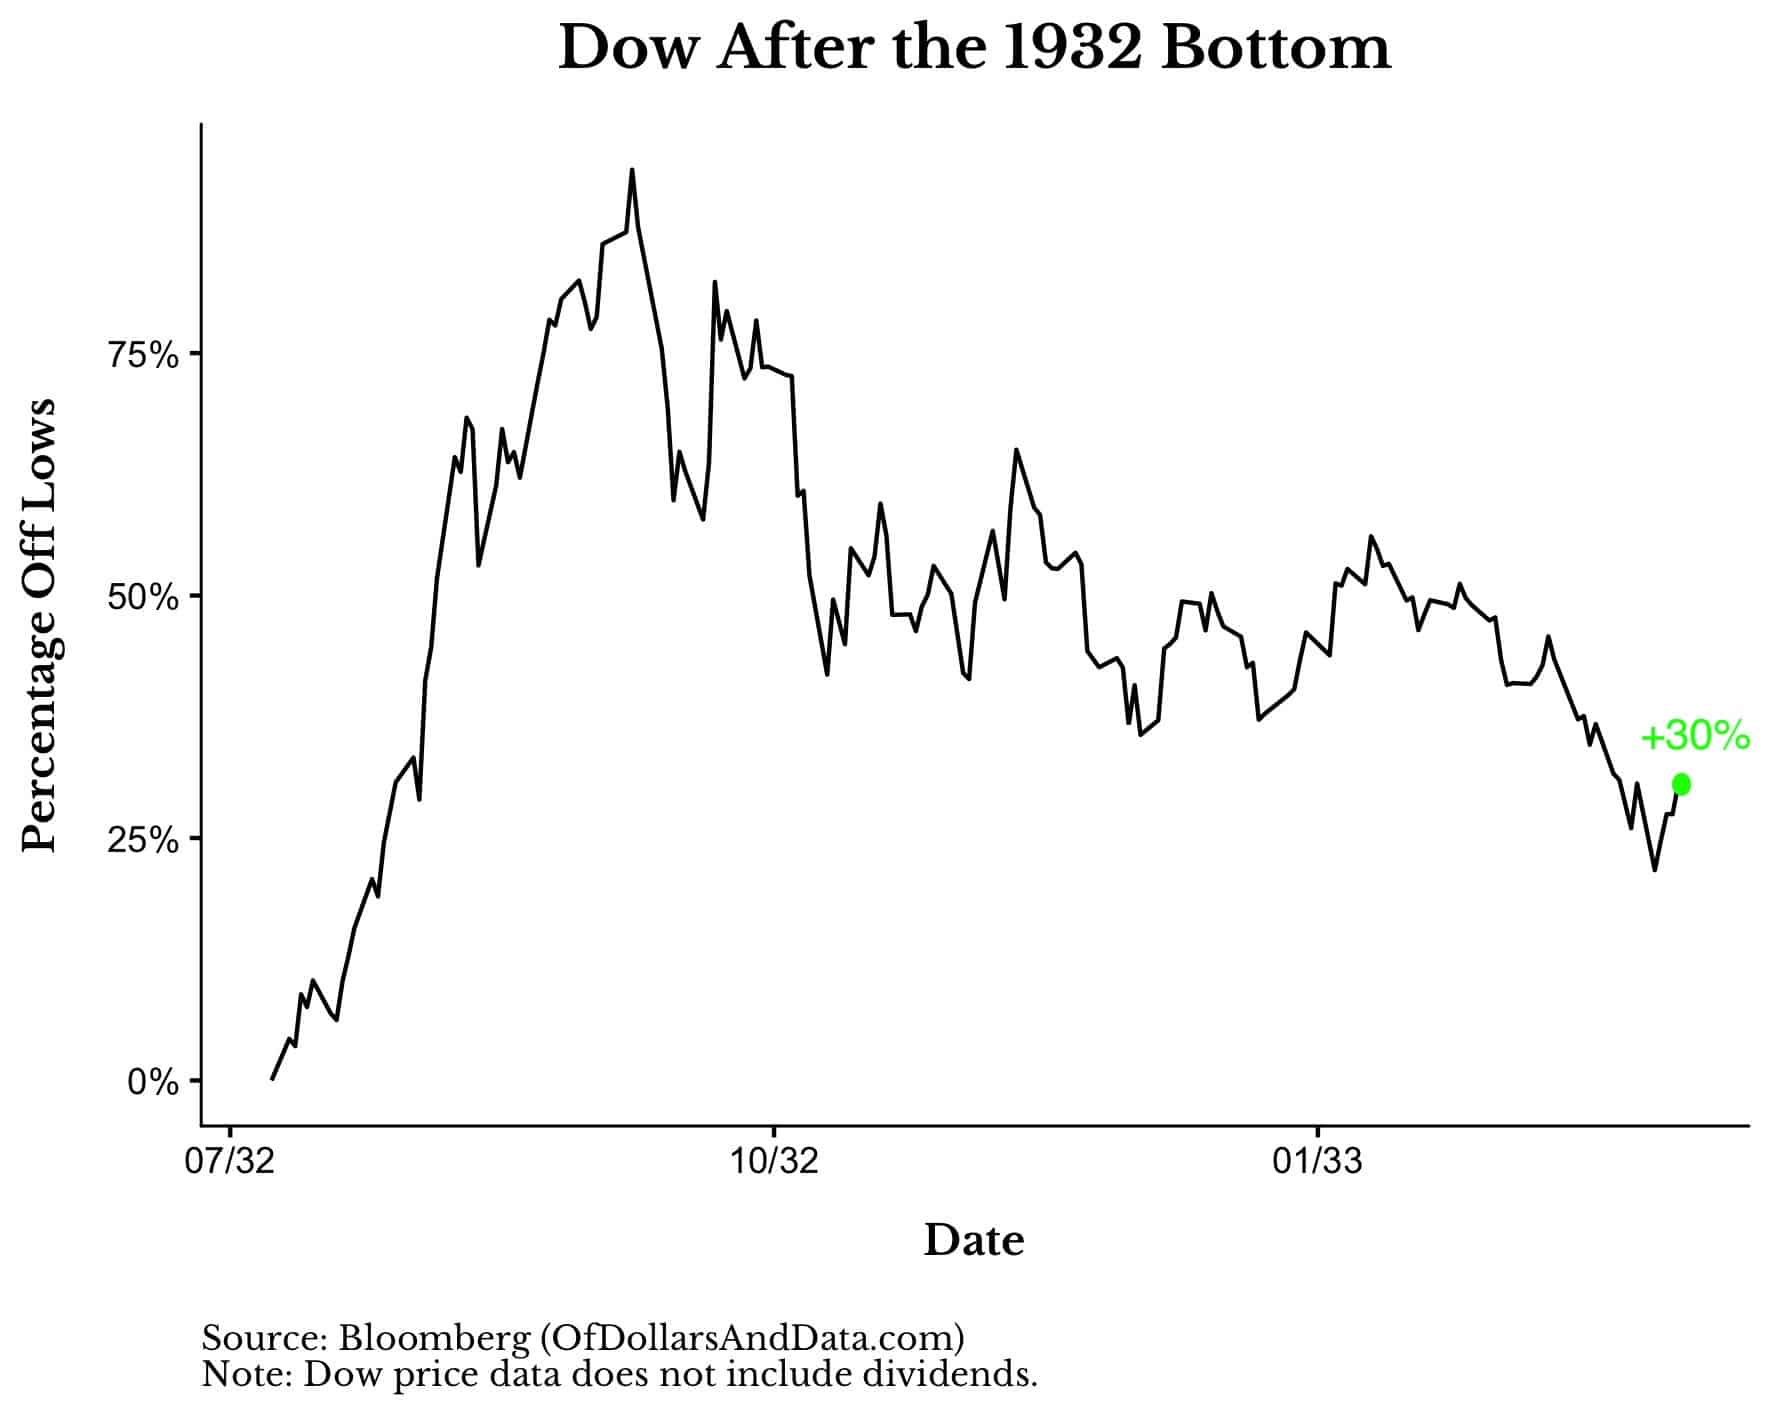 Dow Jones Industrial Average performance following the 1932 bottom.